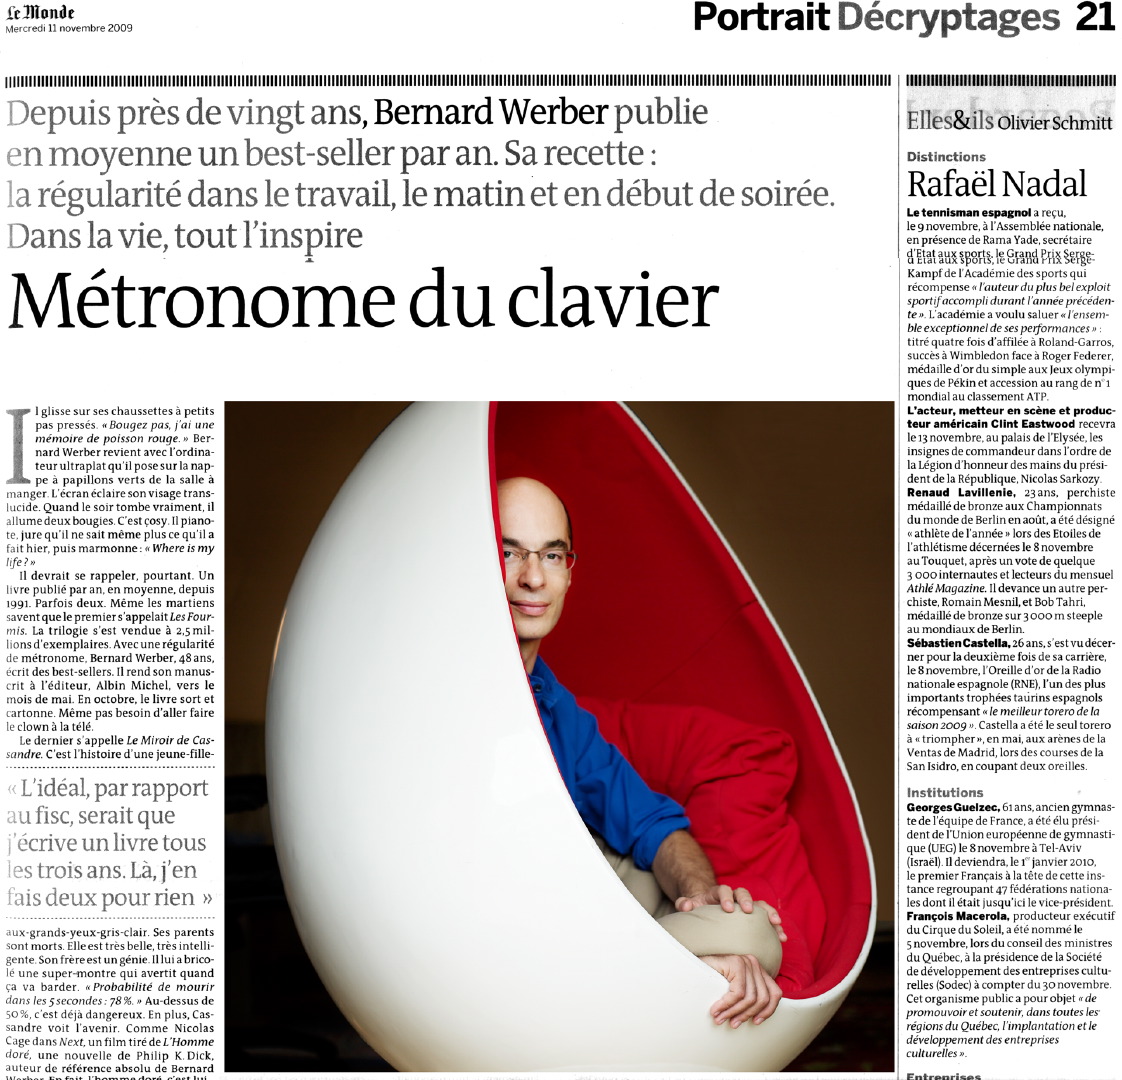 Thibault Stipal - Photographer - Bernard Werber / Le Monde - 1